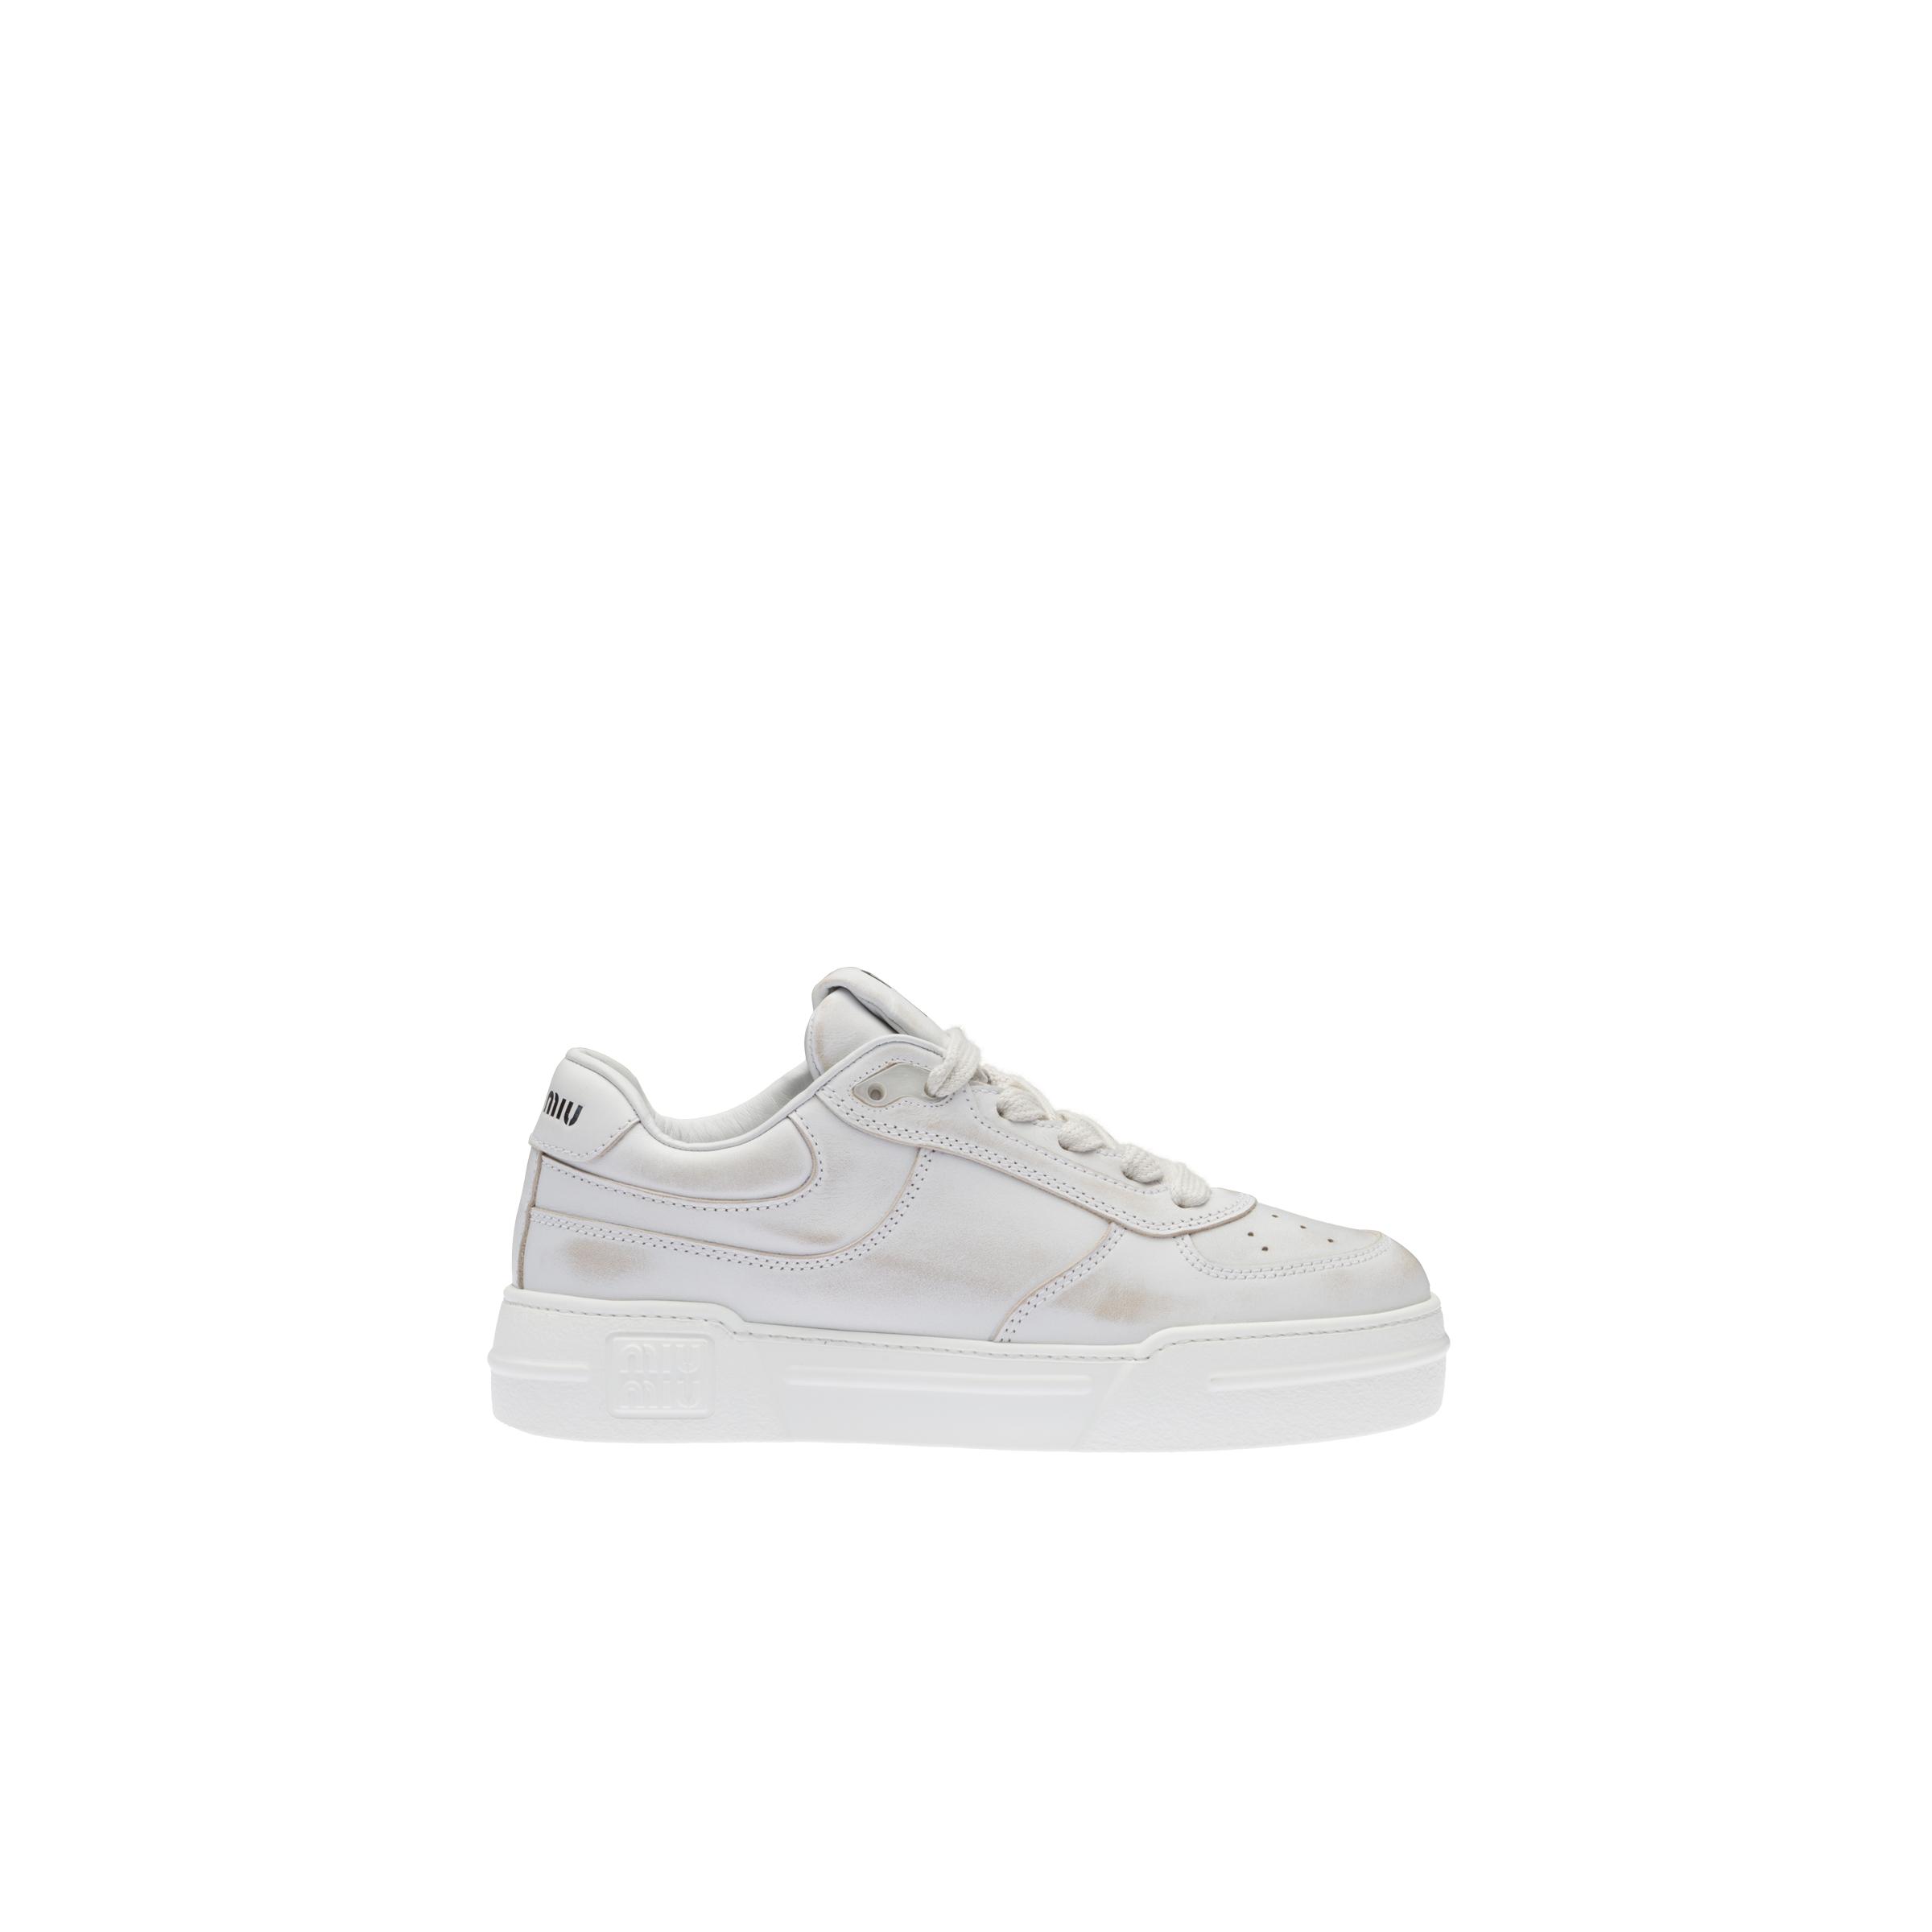 Miu Miu Bleached Leather Sneakers in White | Lyst